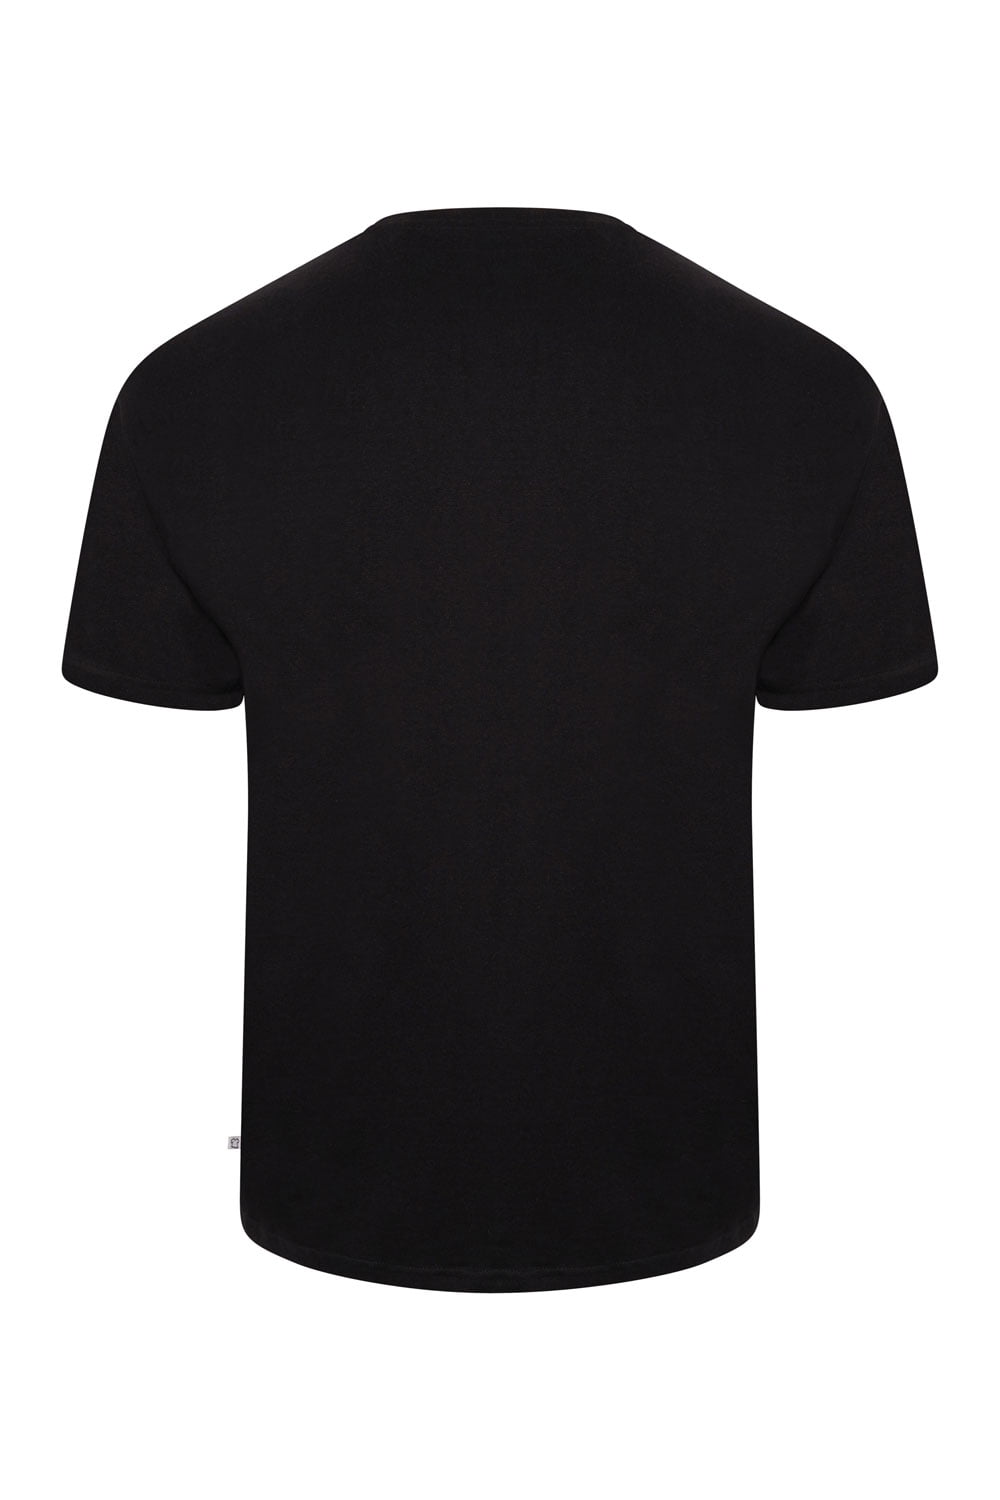 WWE Ultimate Warrior Men's BCI Cotton T-Shirt - Brand Threads